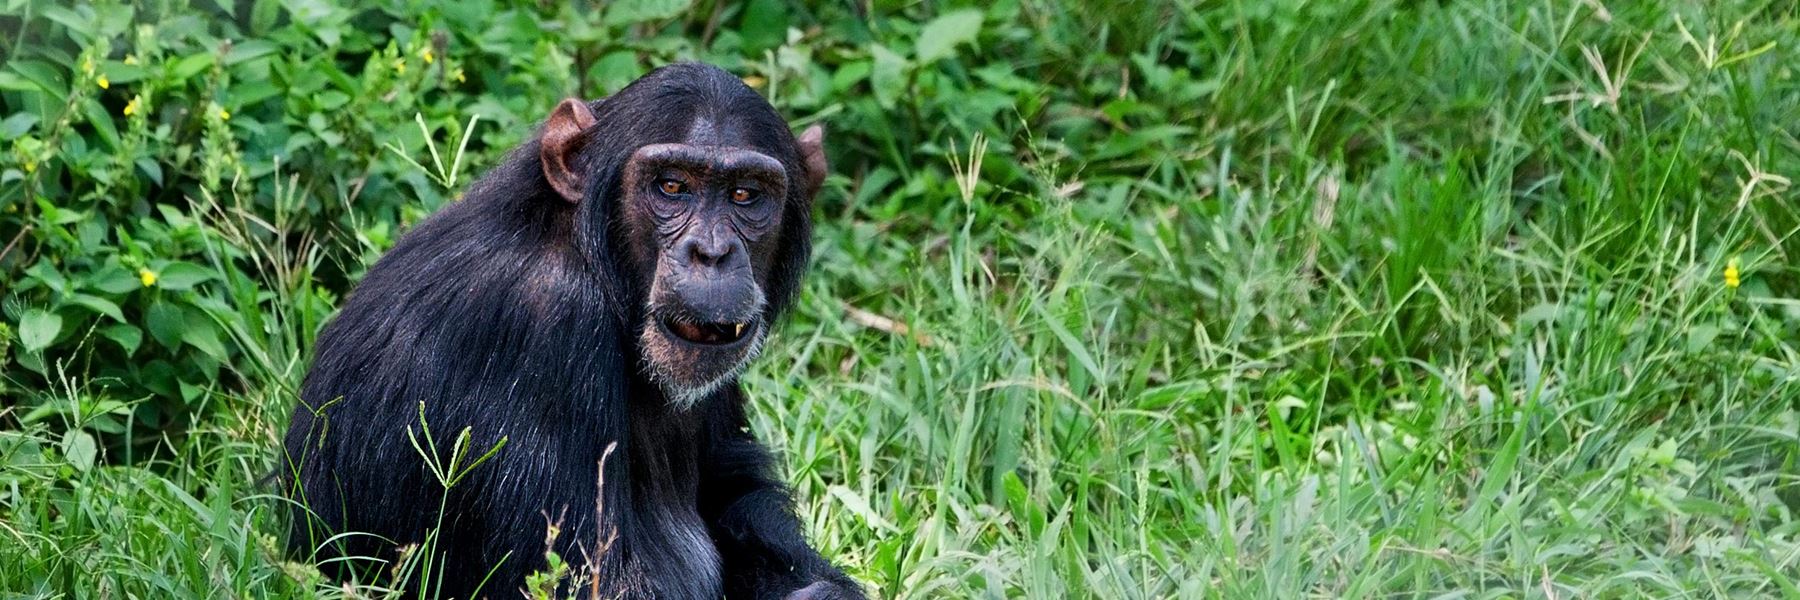 ngamba chimpanzee excursion